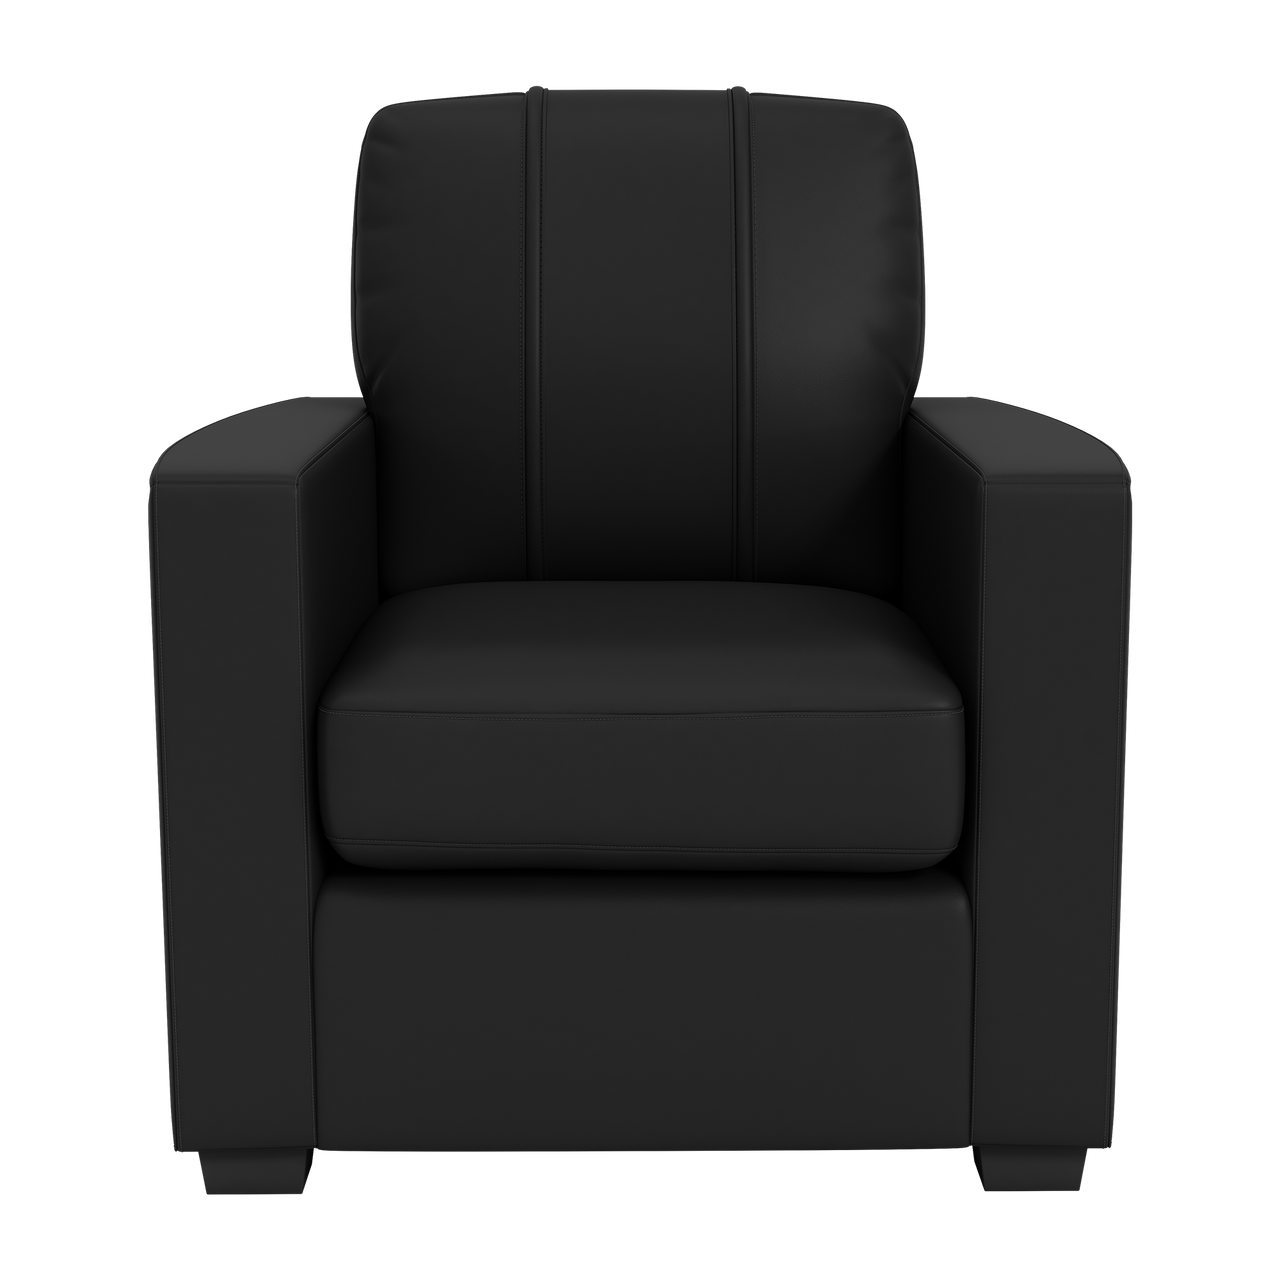 Silver Club Chair with GMC Alternate Logo